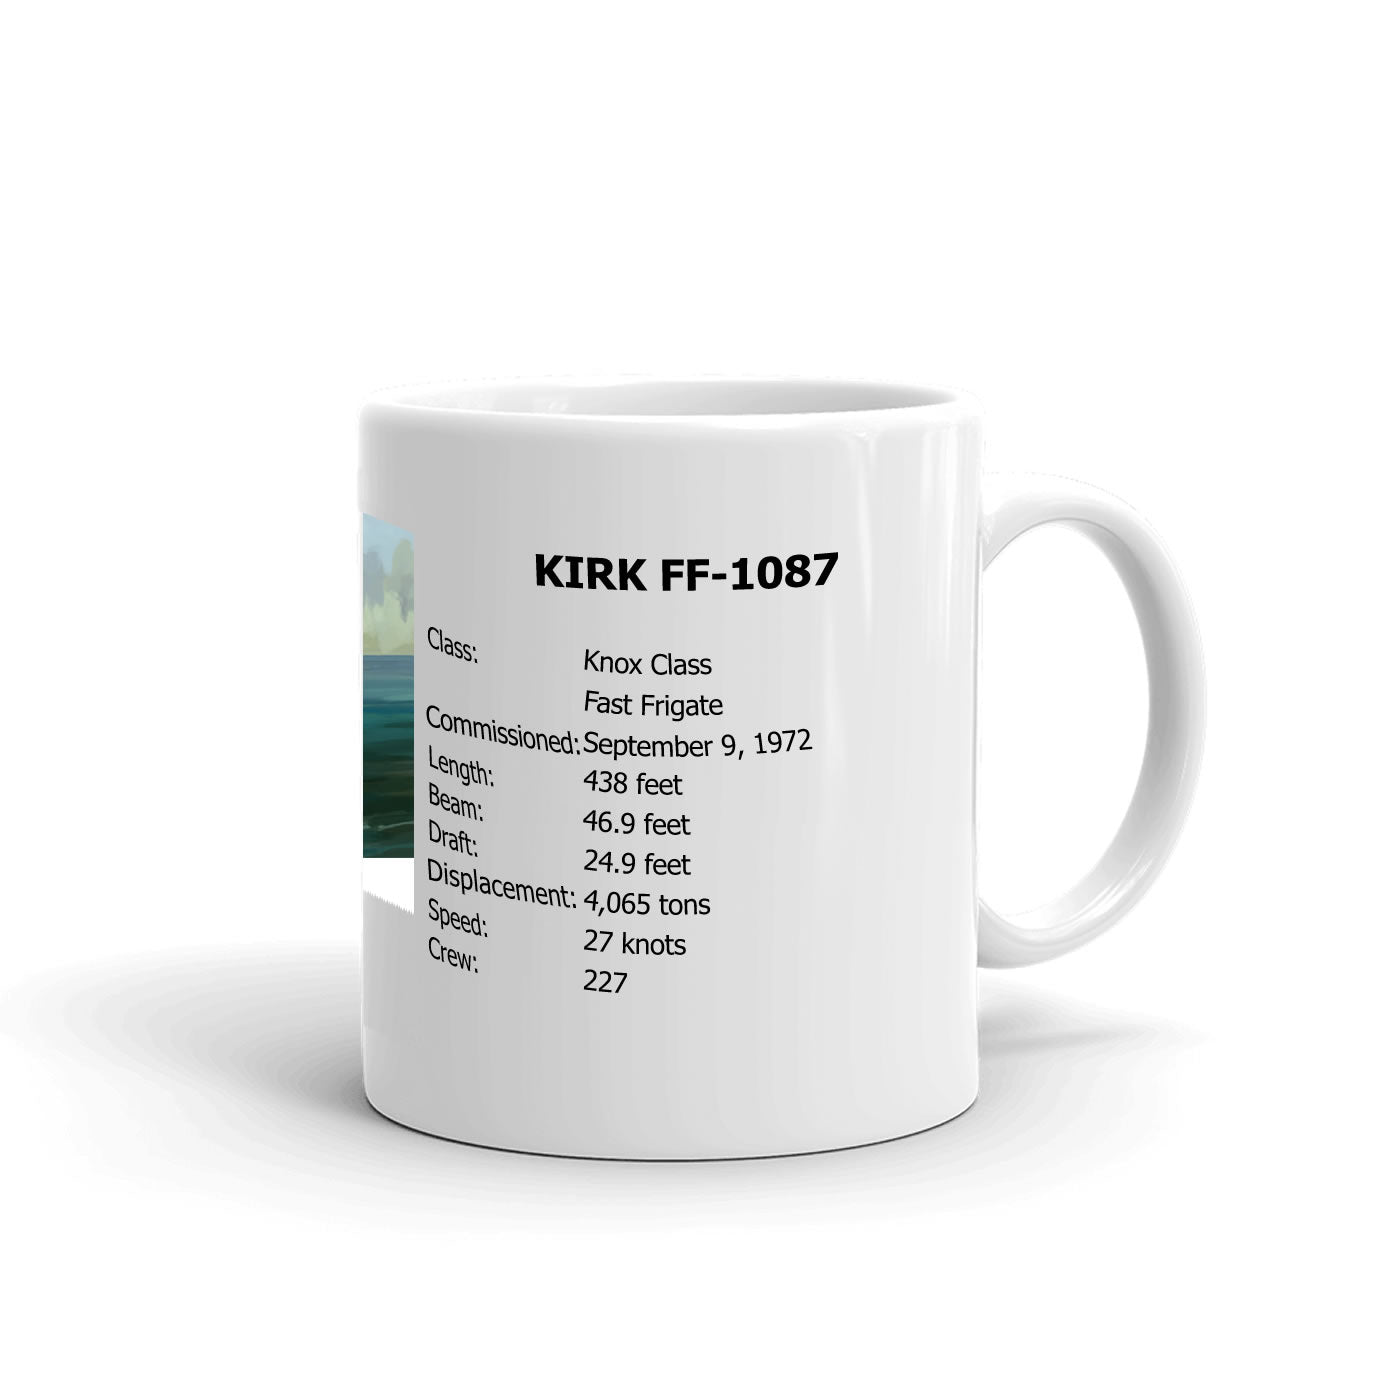 USS Kirk FF-1087 Coffee Cup Mug Right Handle